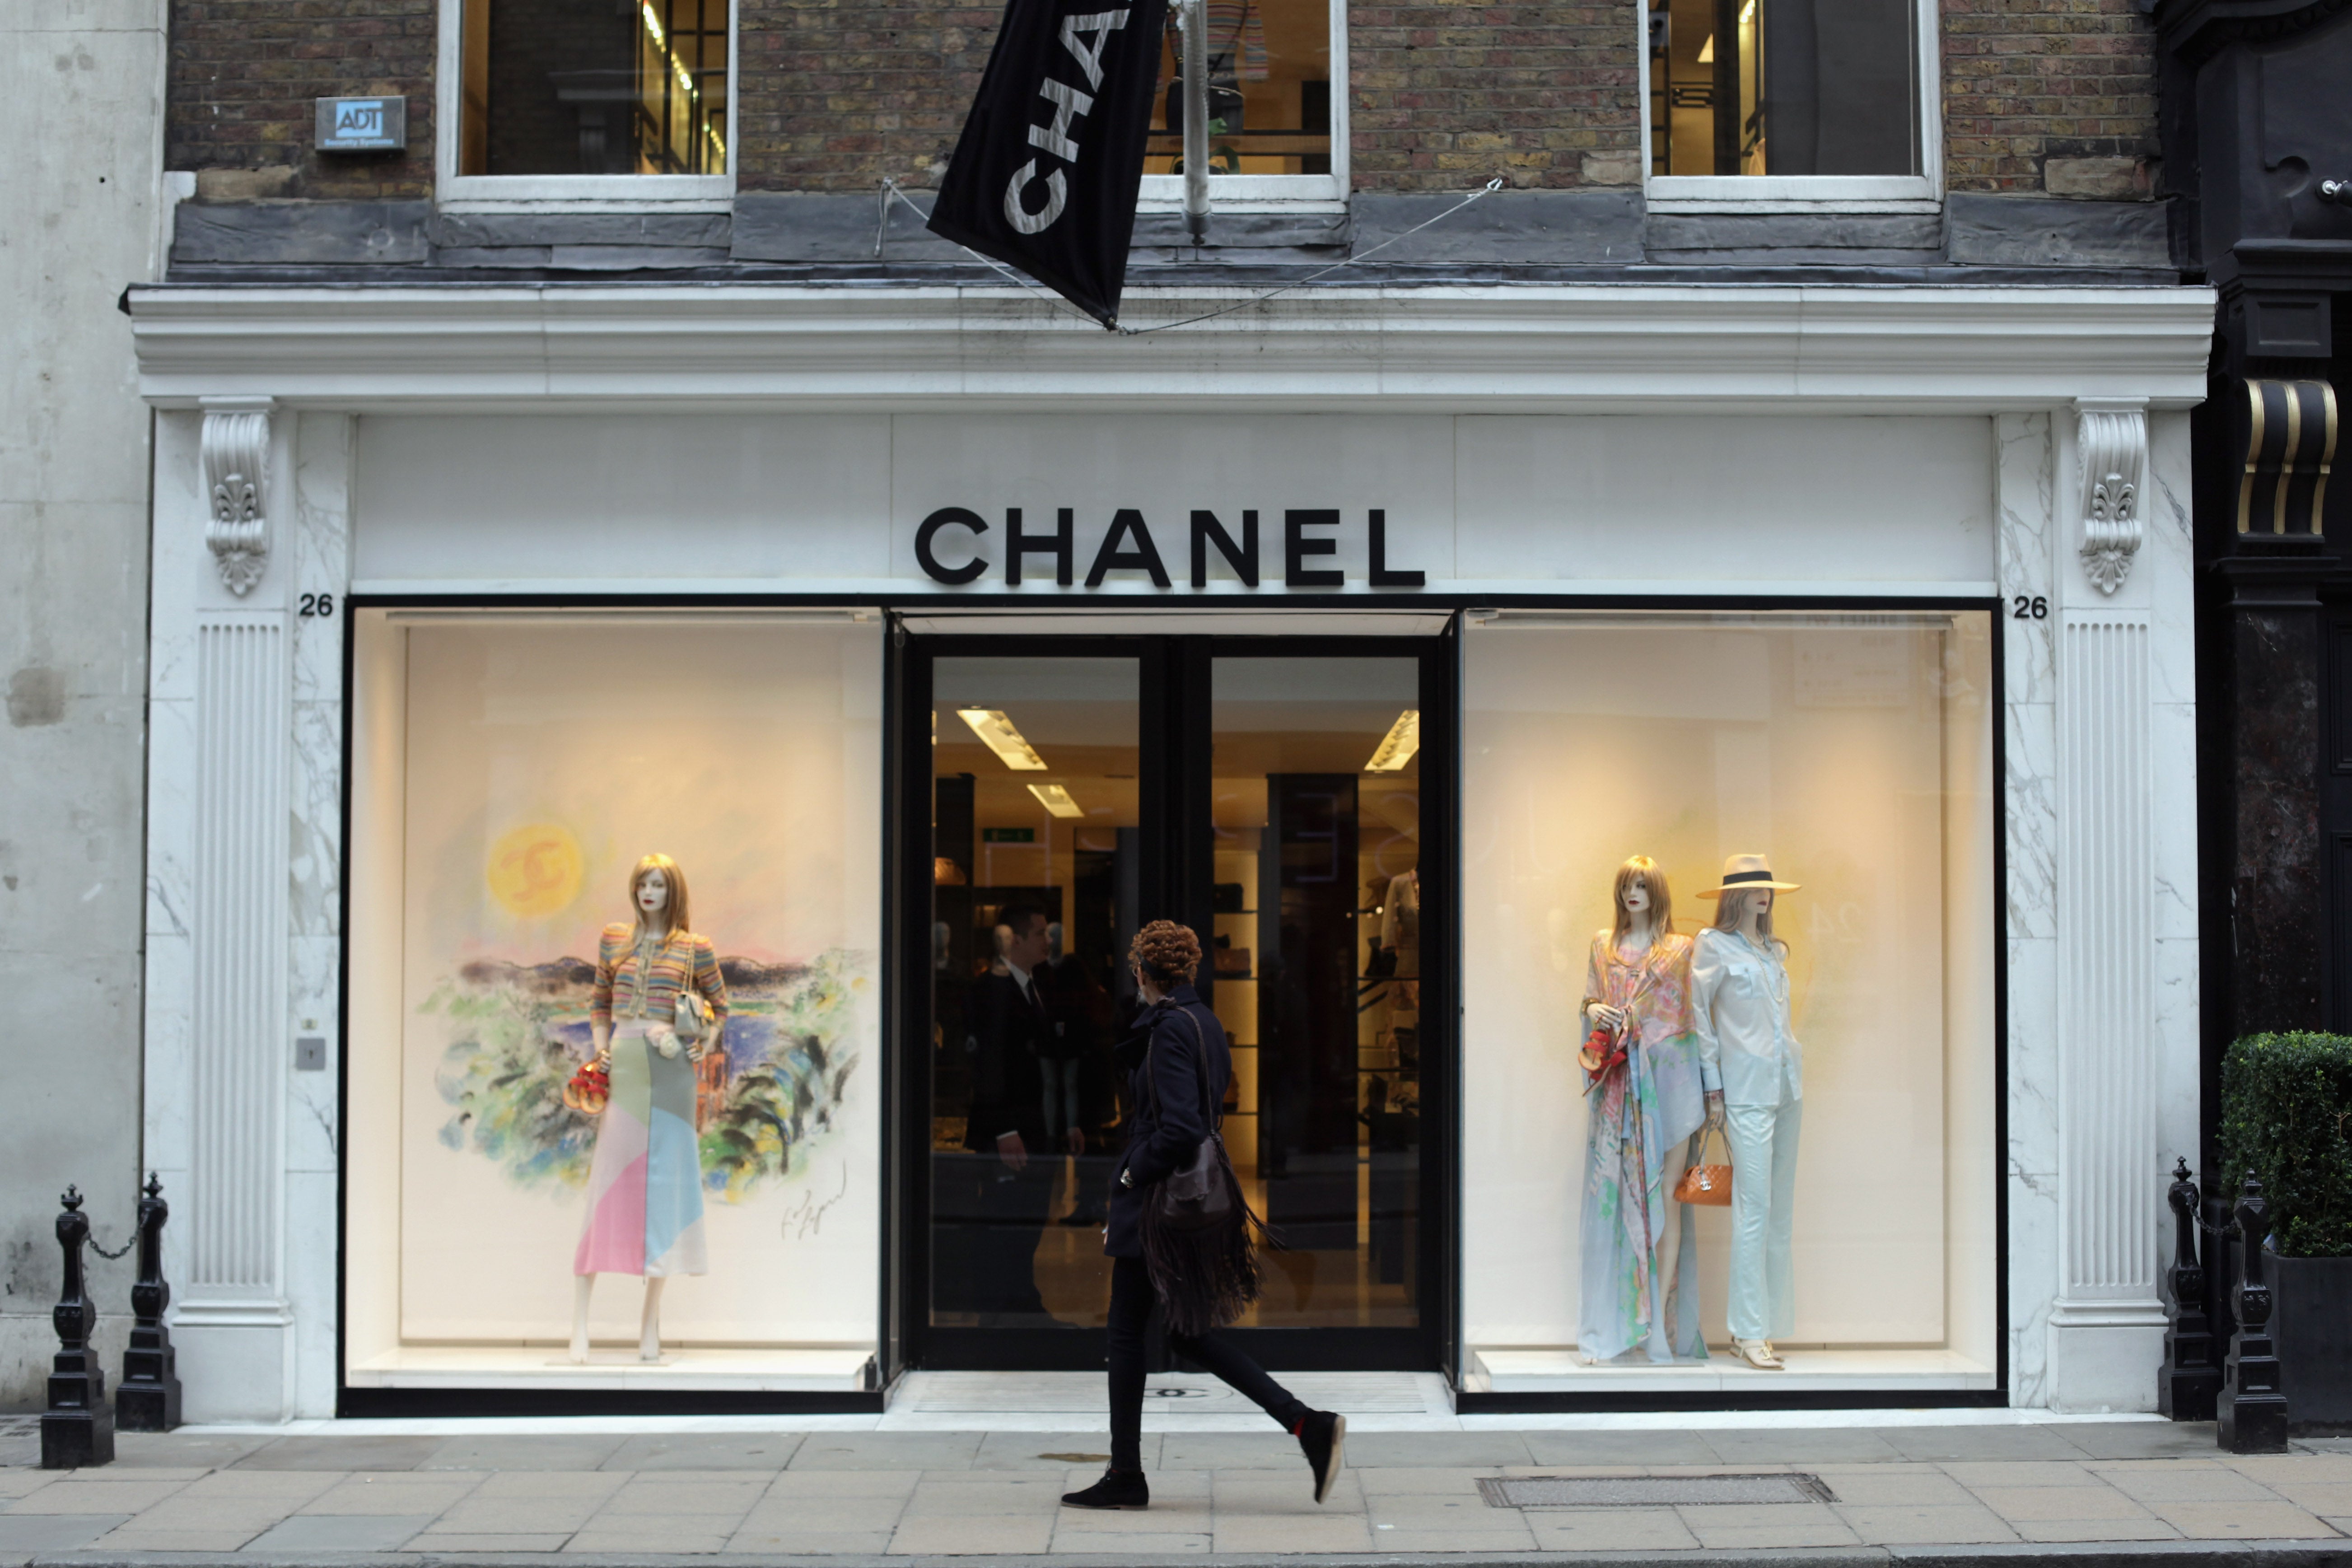 London’s Chanel branch on Bond Street